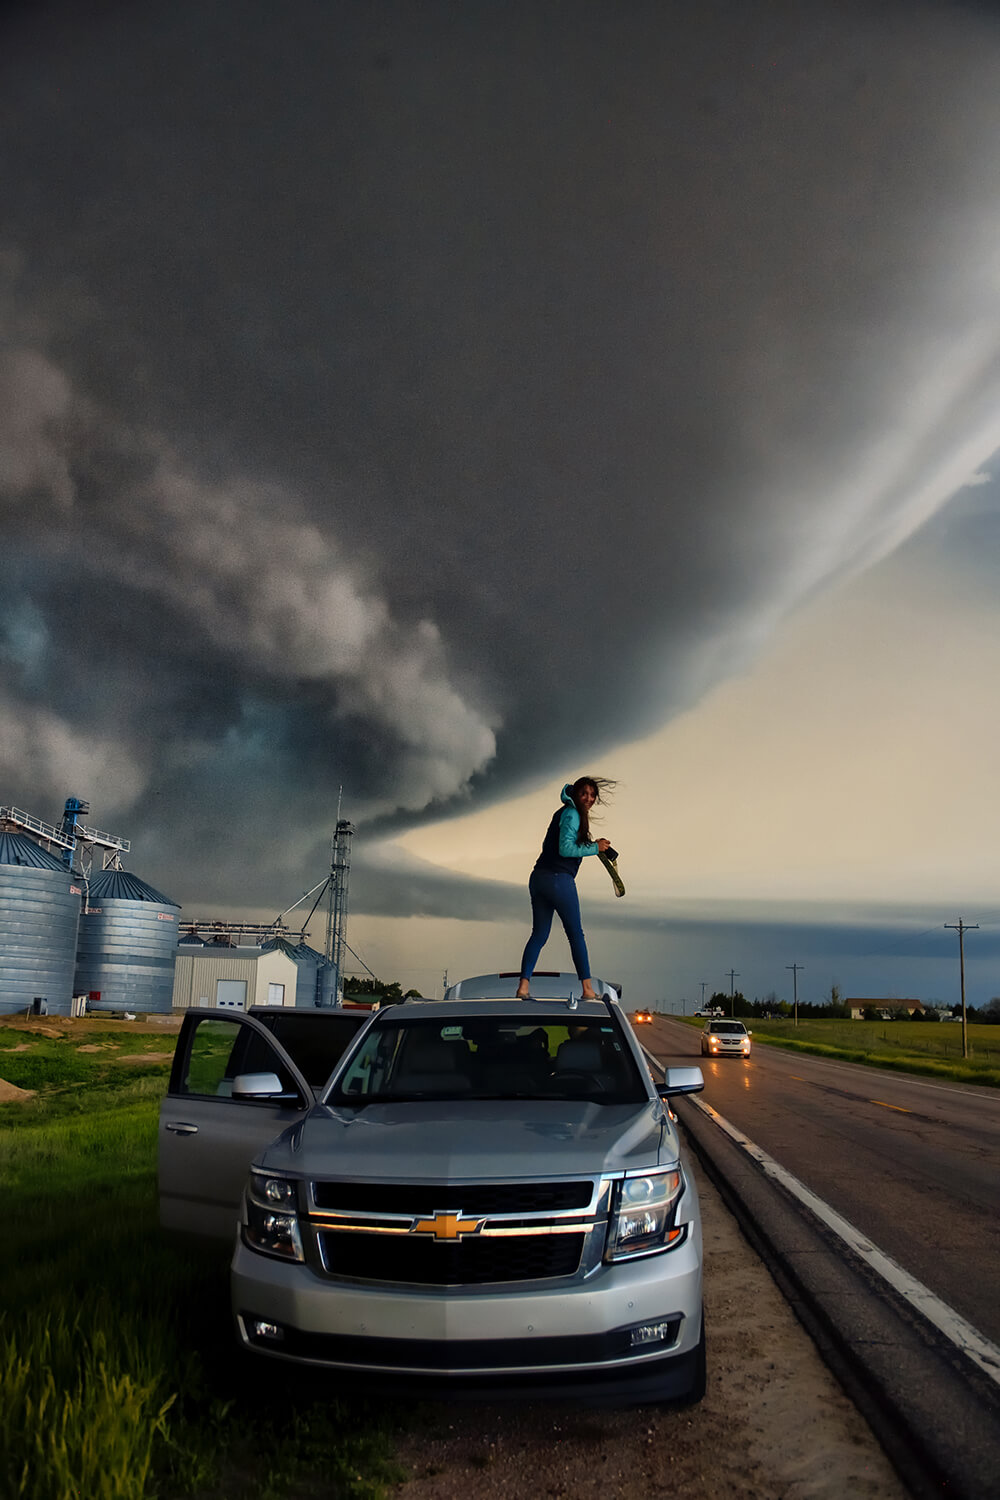 Photographer on top of a car shooting the tornado